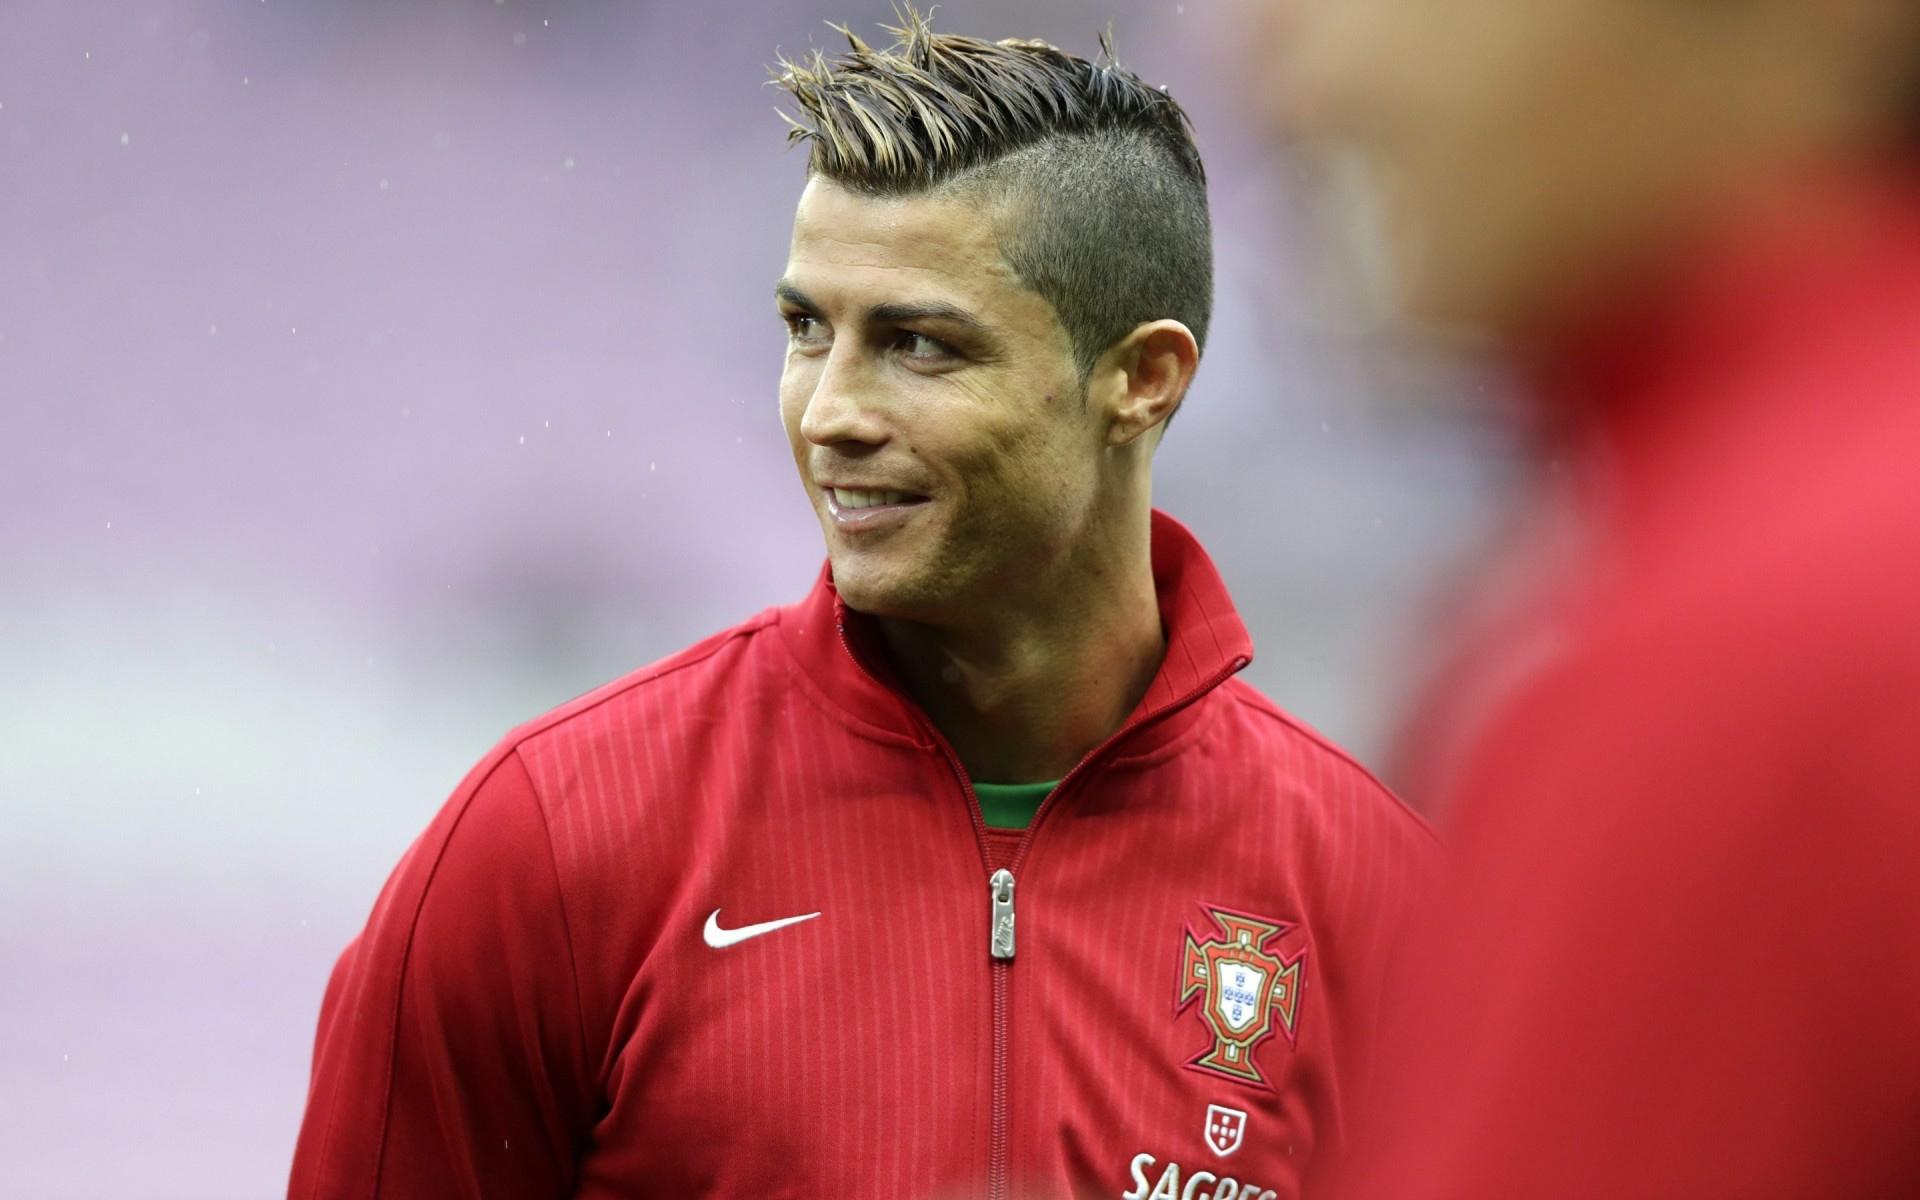 Cristiano Ronaldo World Cup hairstyle wallpaper Ronaldo